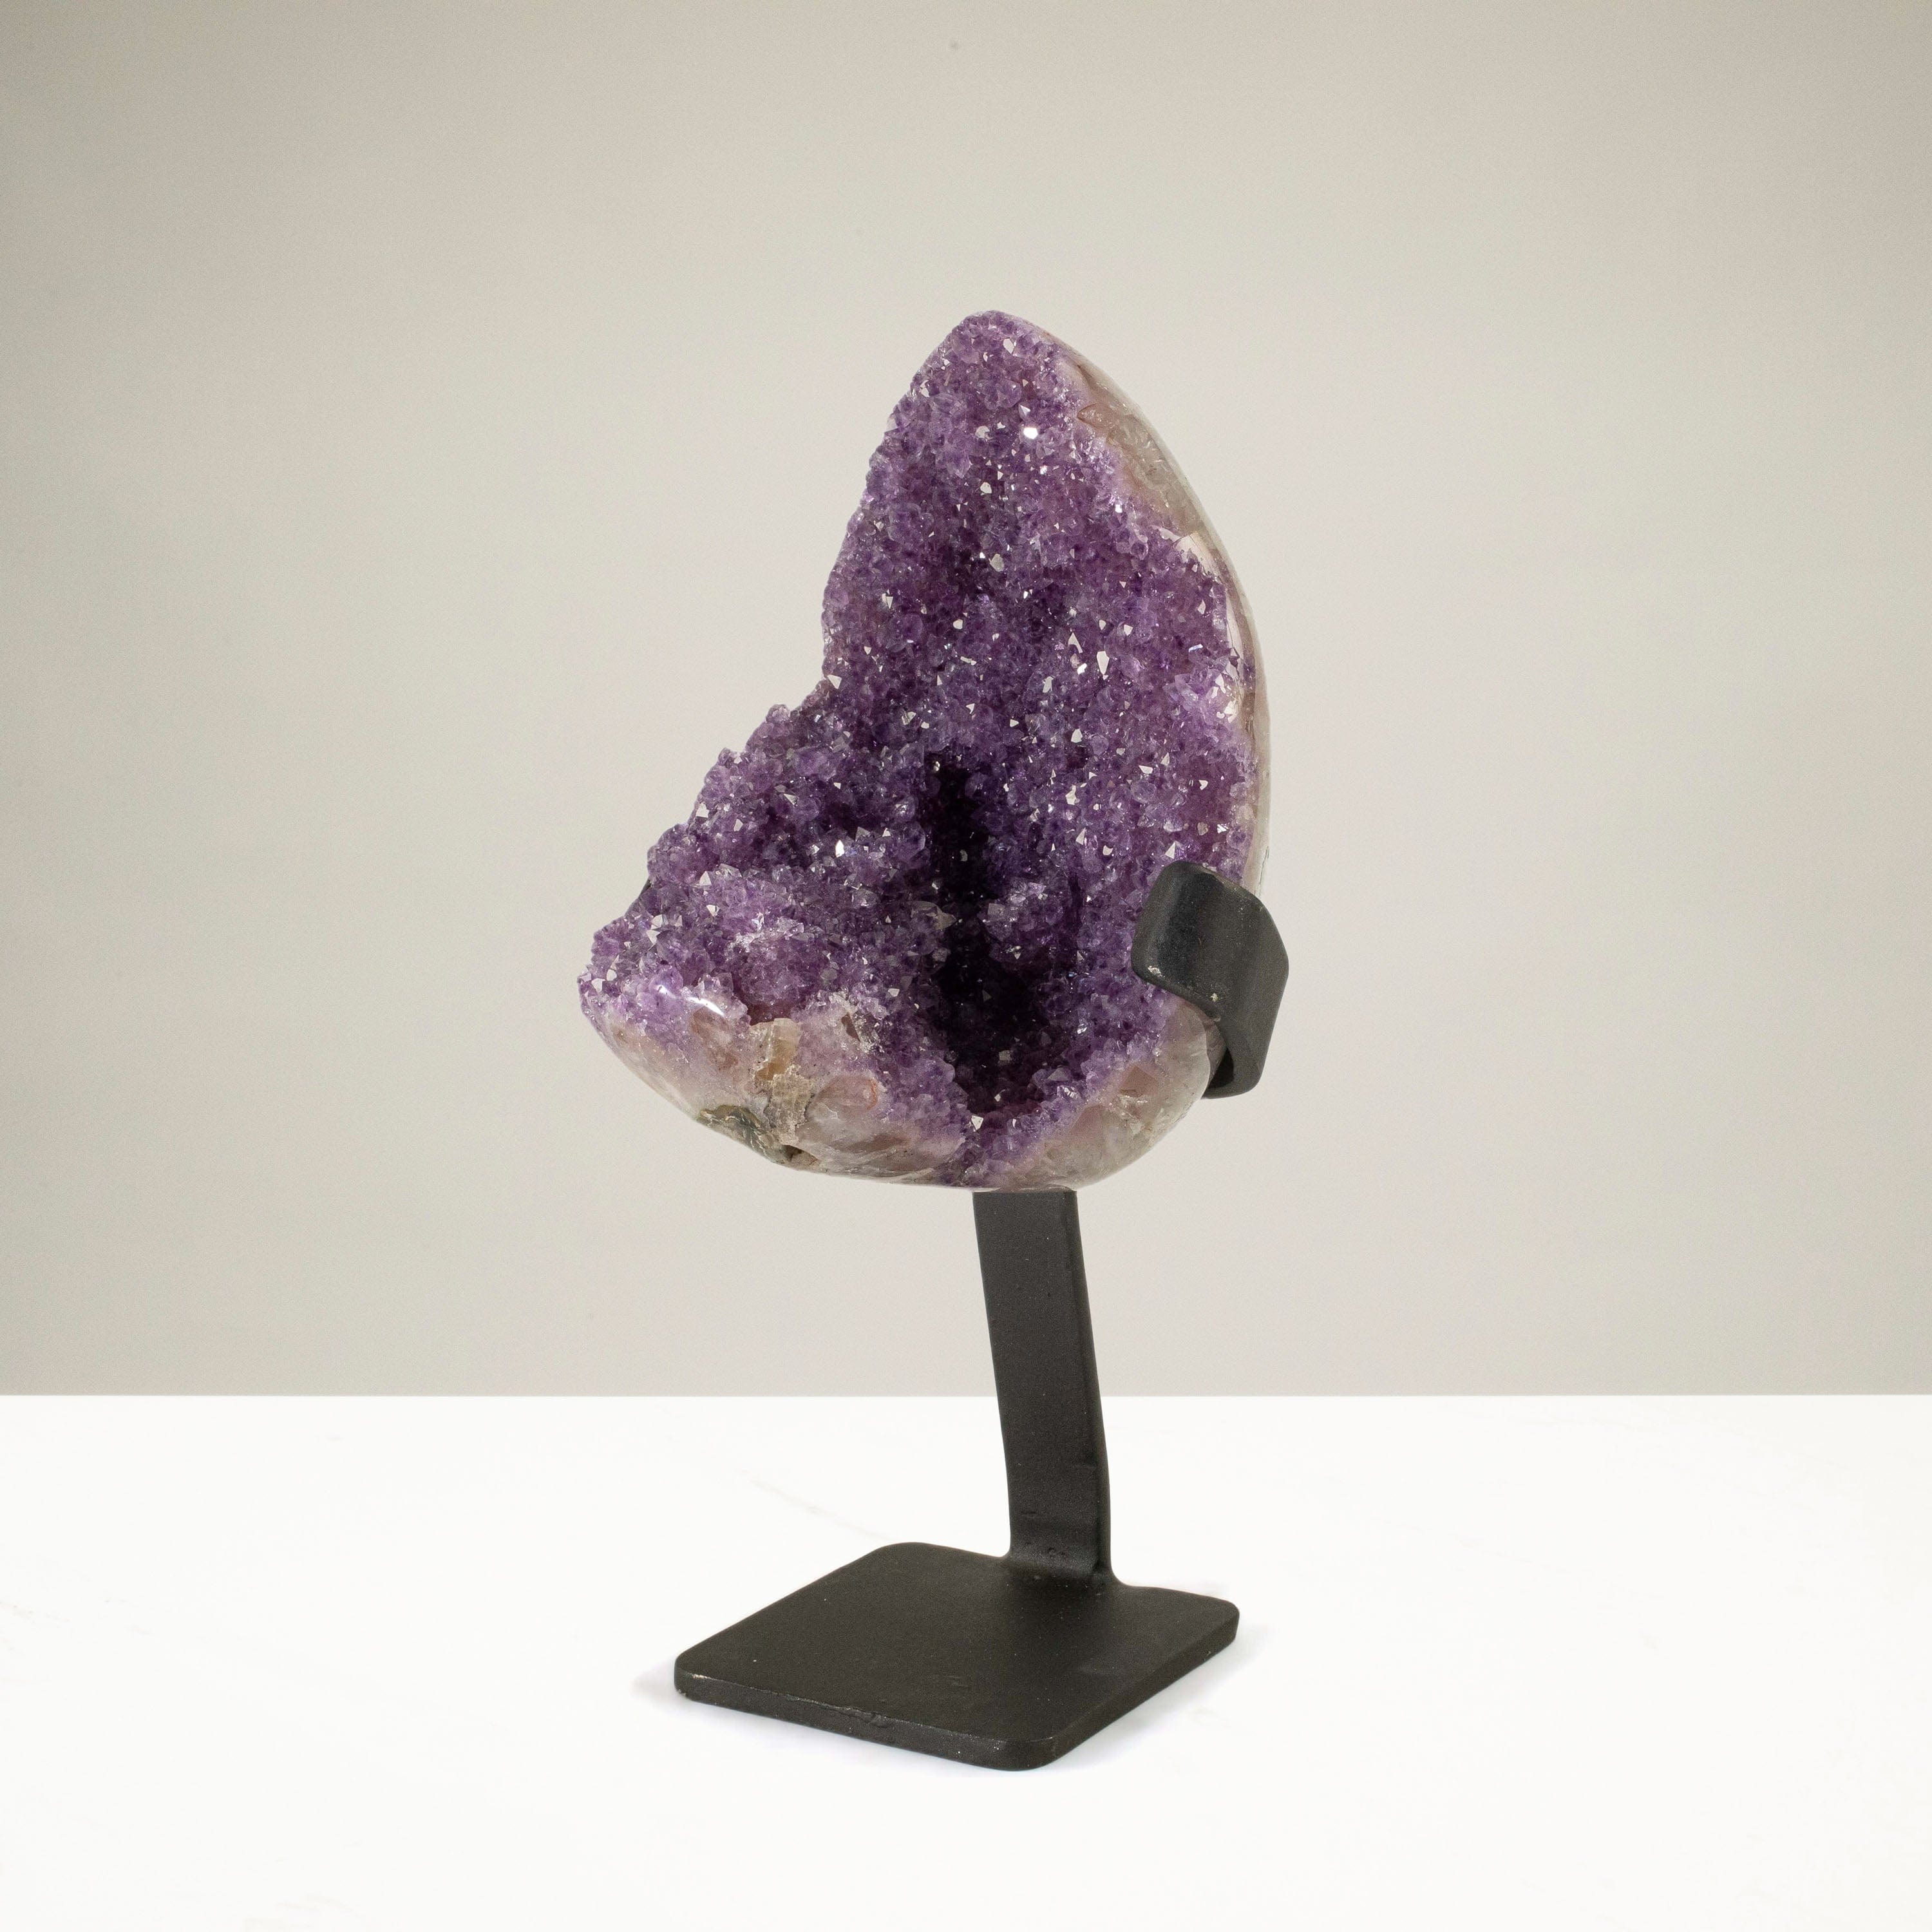 Kalifano Amethyst Uruguayan Amethyst Geode on Custom Stand - 7.8 lbs / 11.5 in. UAG3500.006